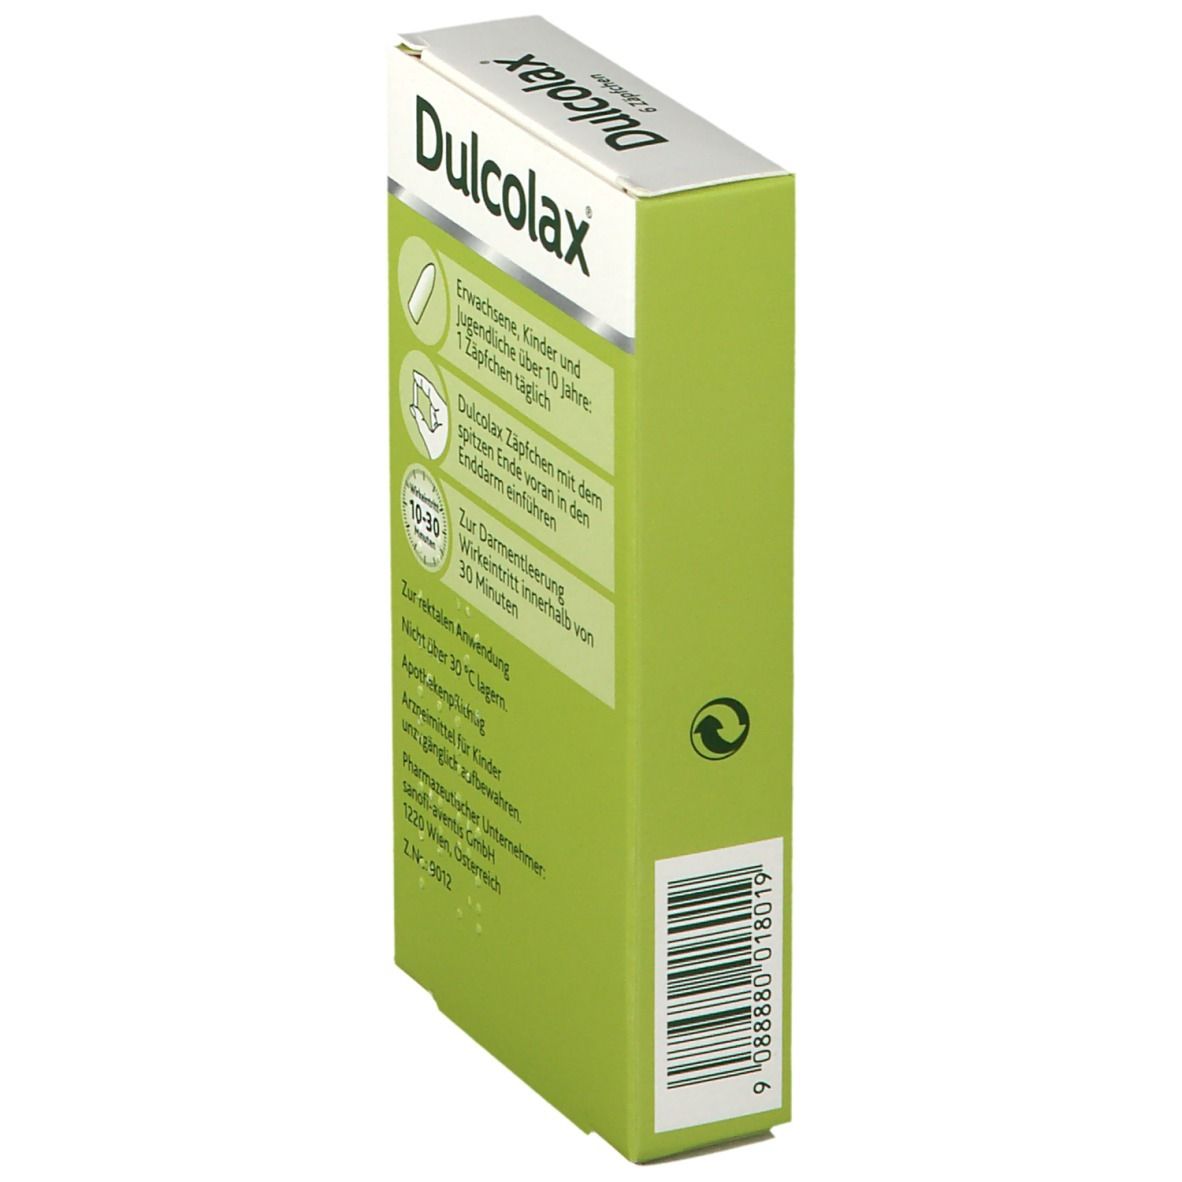 Dulcolax® Zäpfchen befreien rasch bei Verstopfung 6 St - shop-apotheke.at